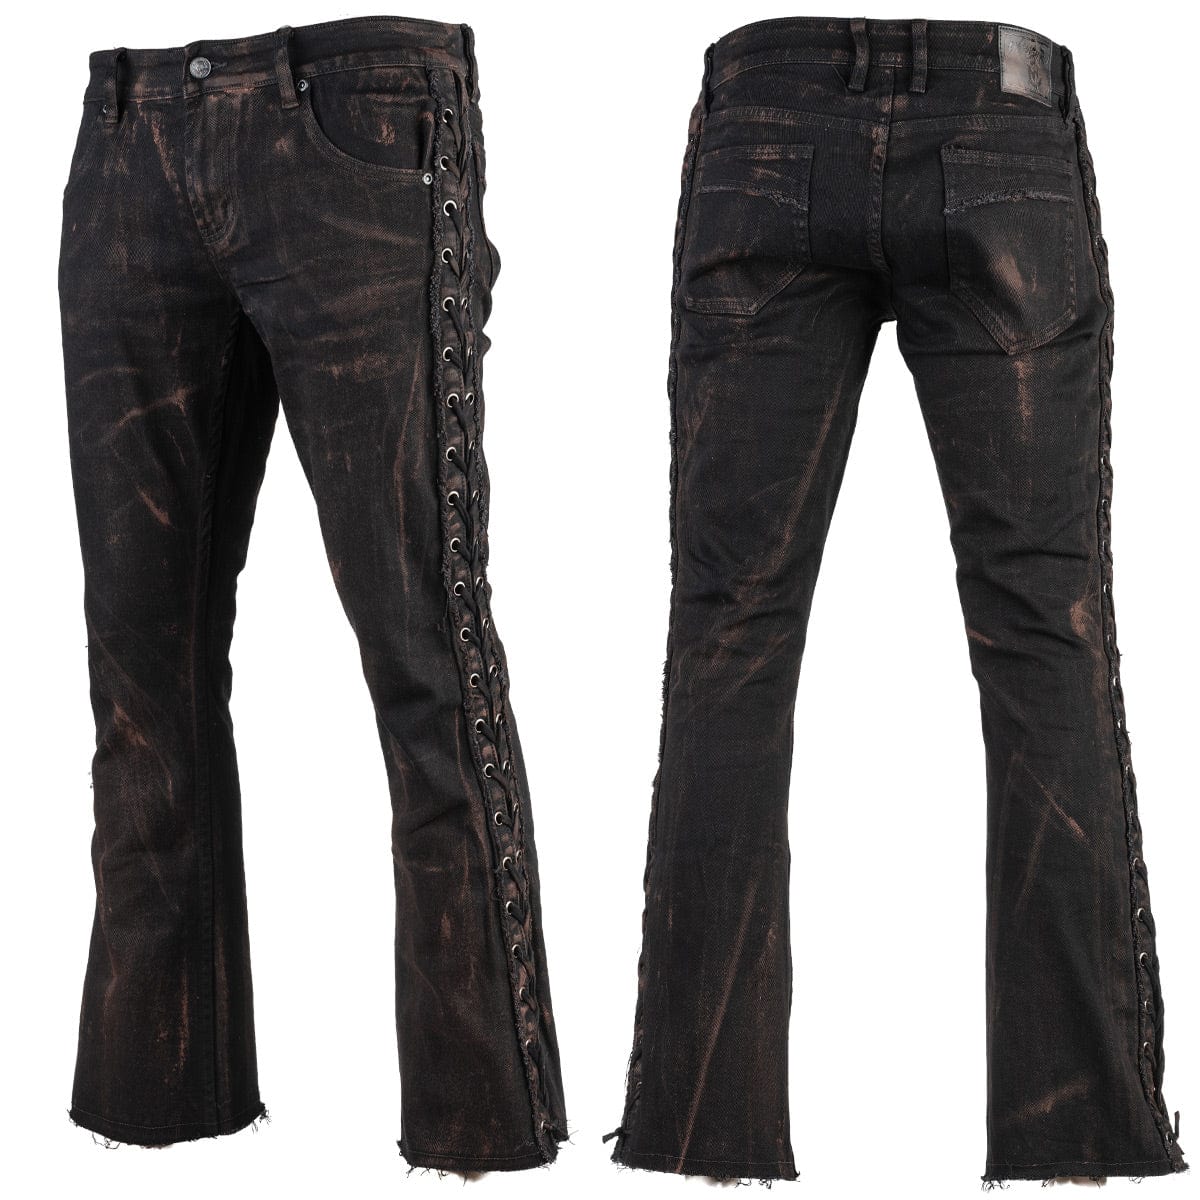 Custom Chop Shop Pants Wornstar Custom Jeans - Raw Umber Alloy Washed Side Laced